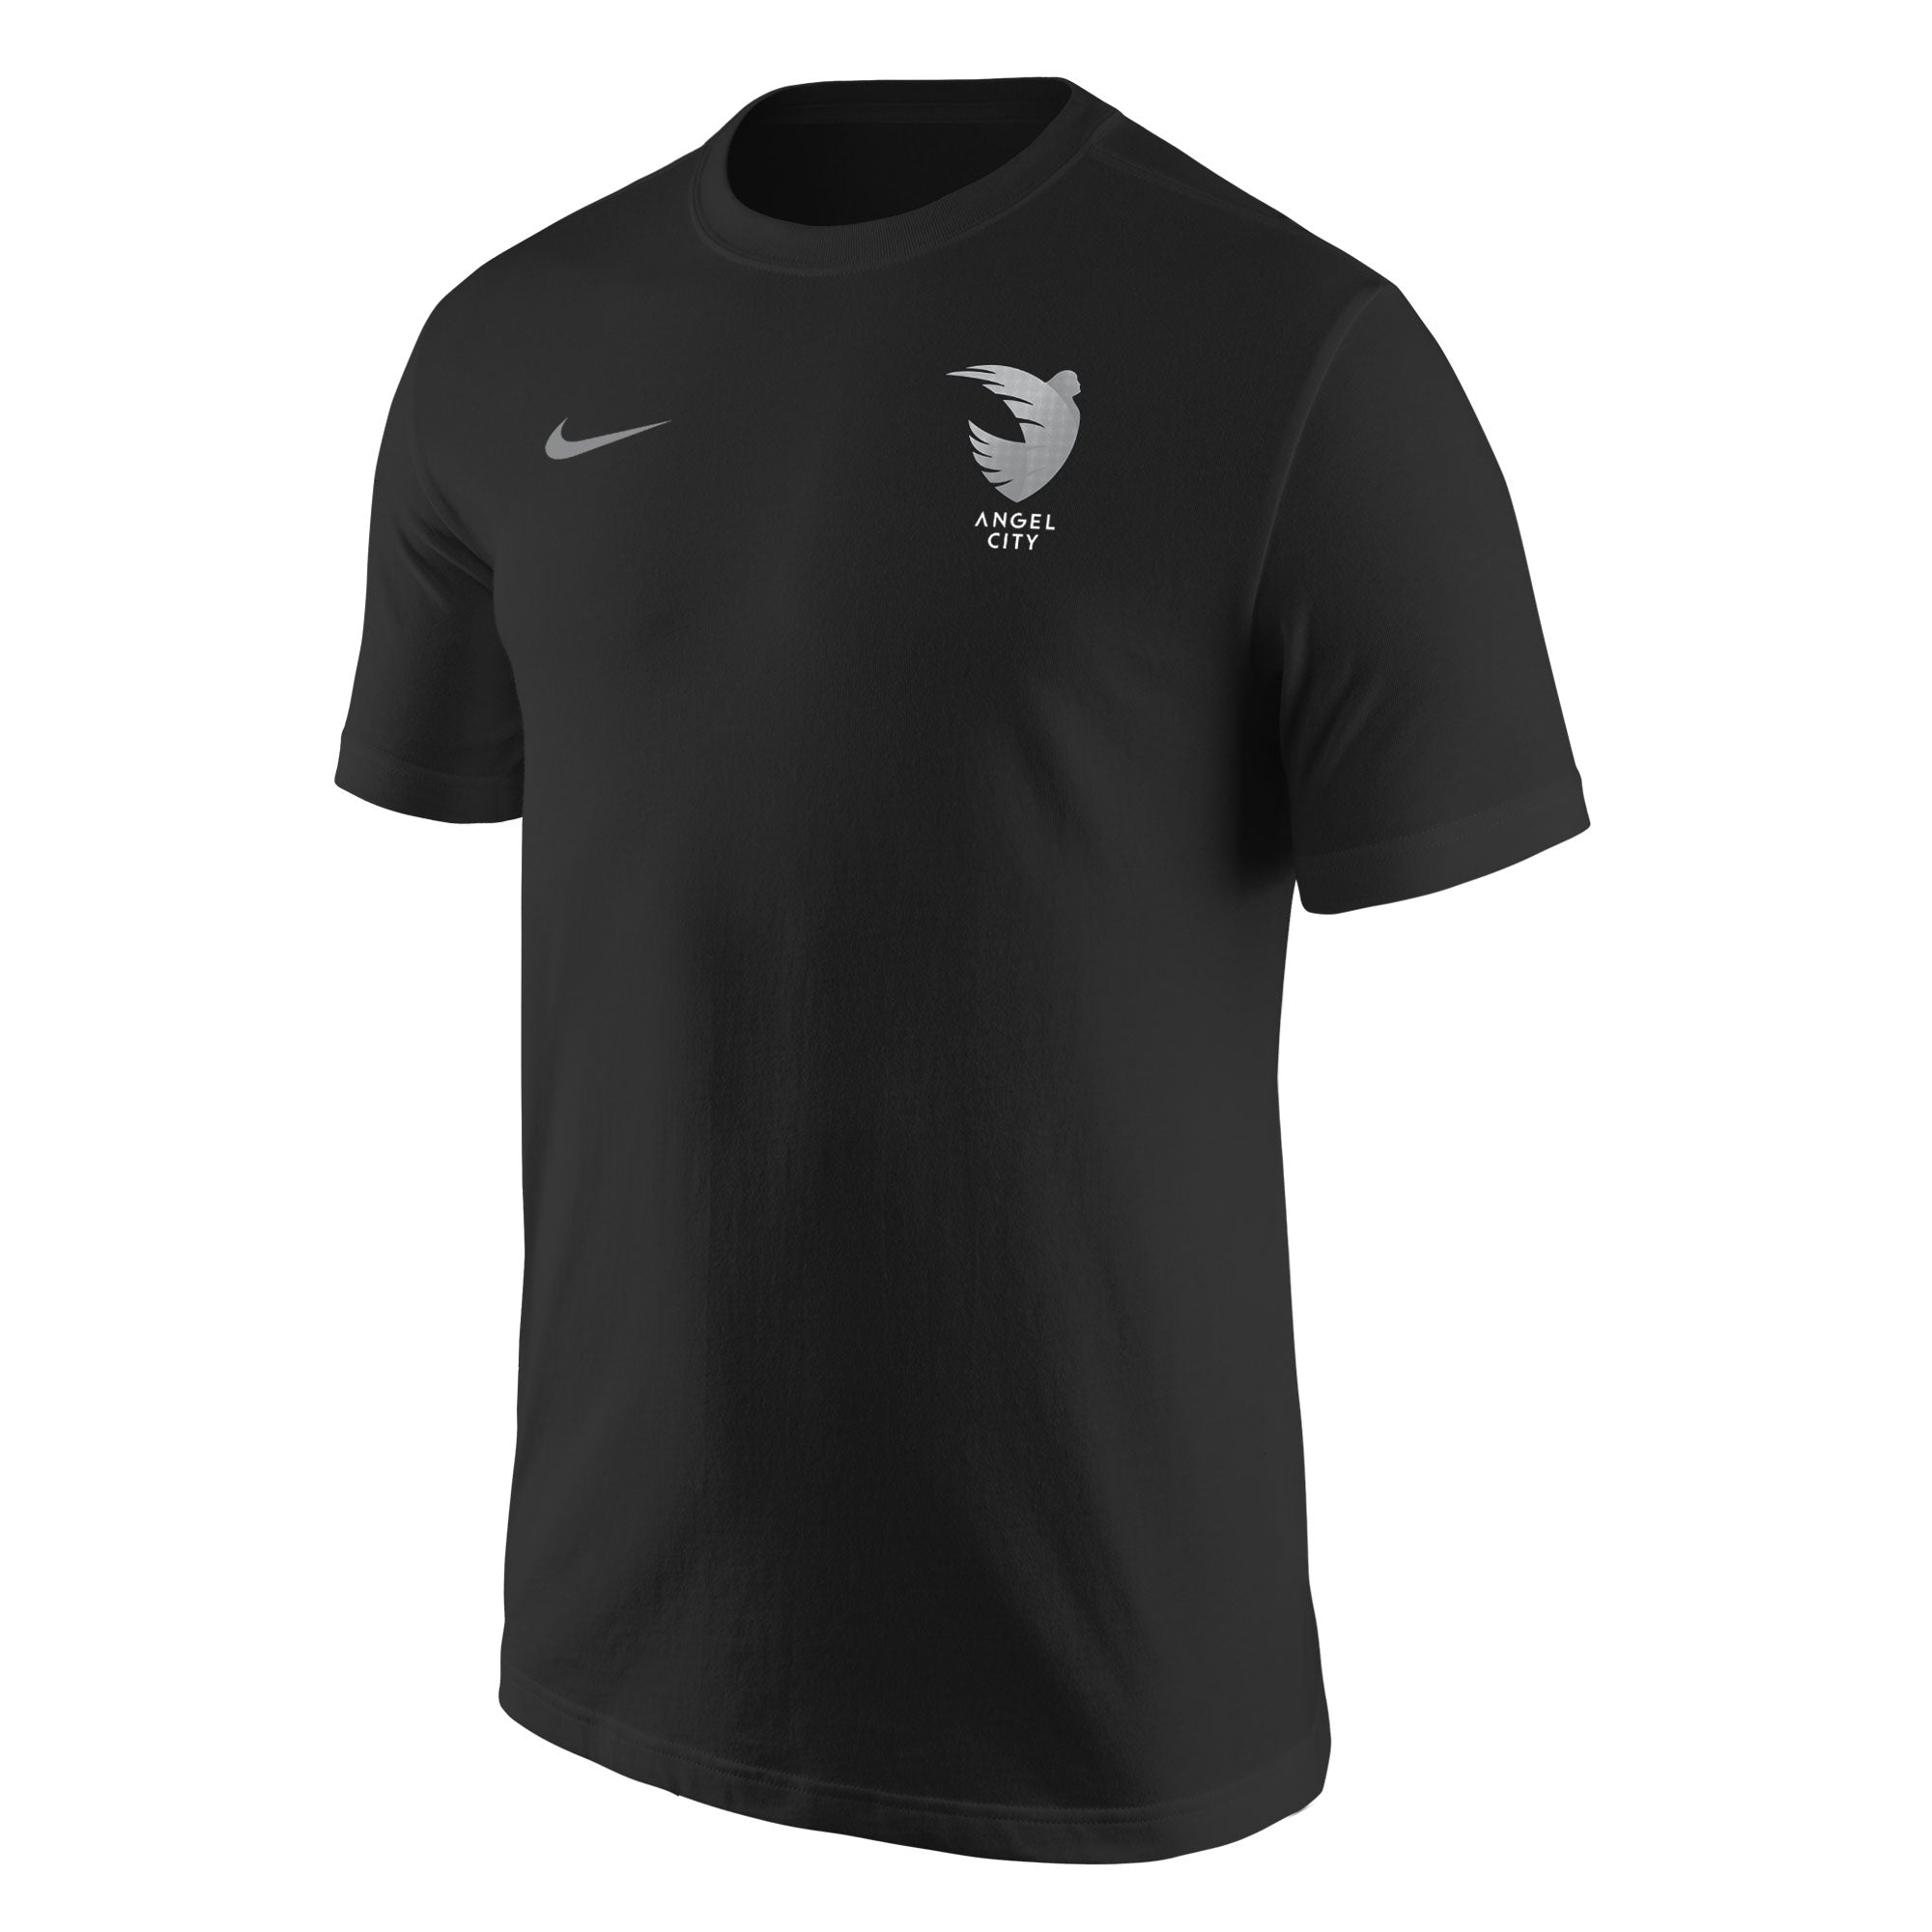 Angel City Nike Camiseta unisex de manga corta con emblema de armadura negra